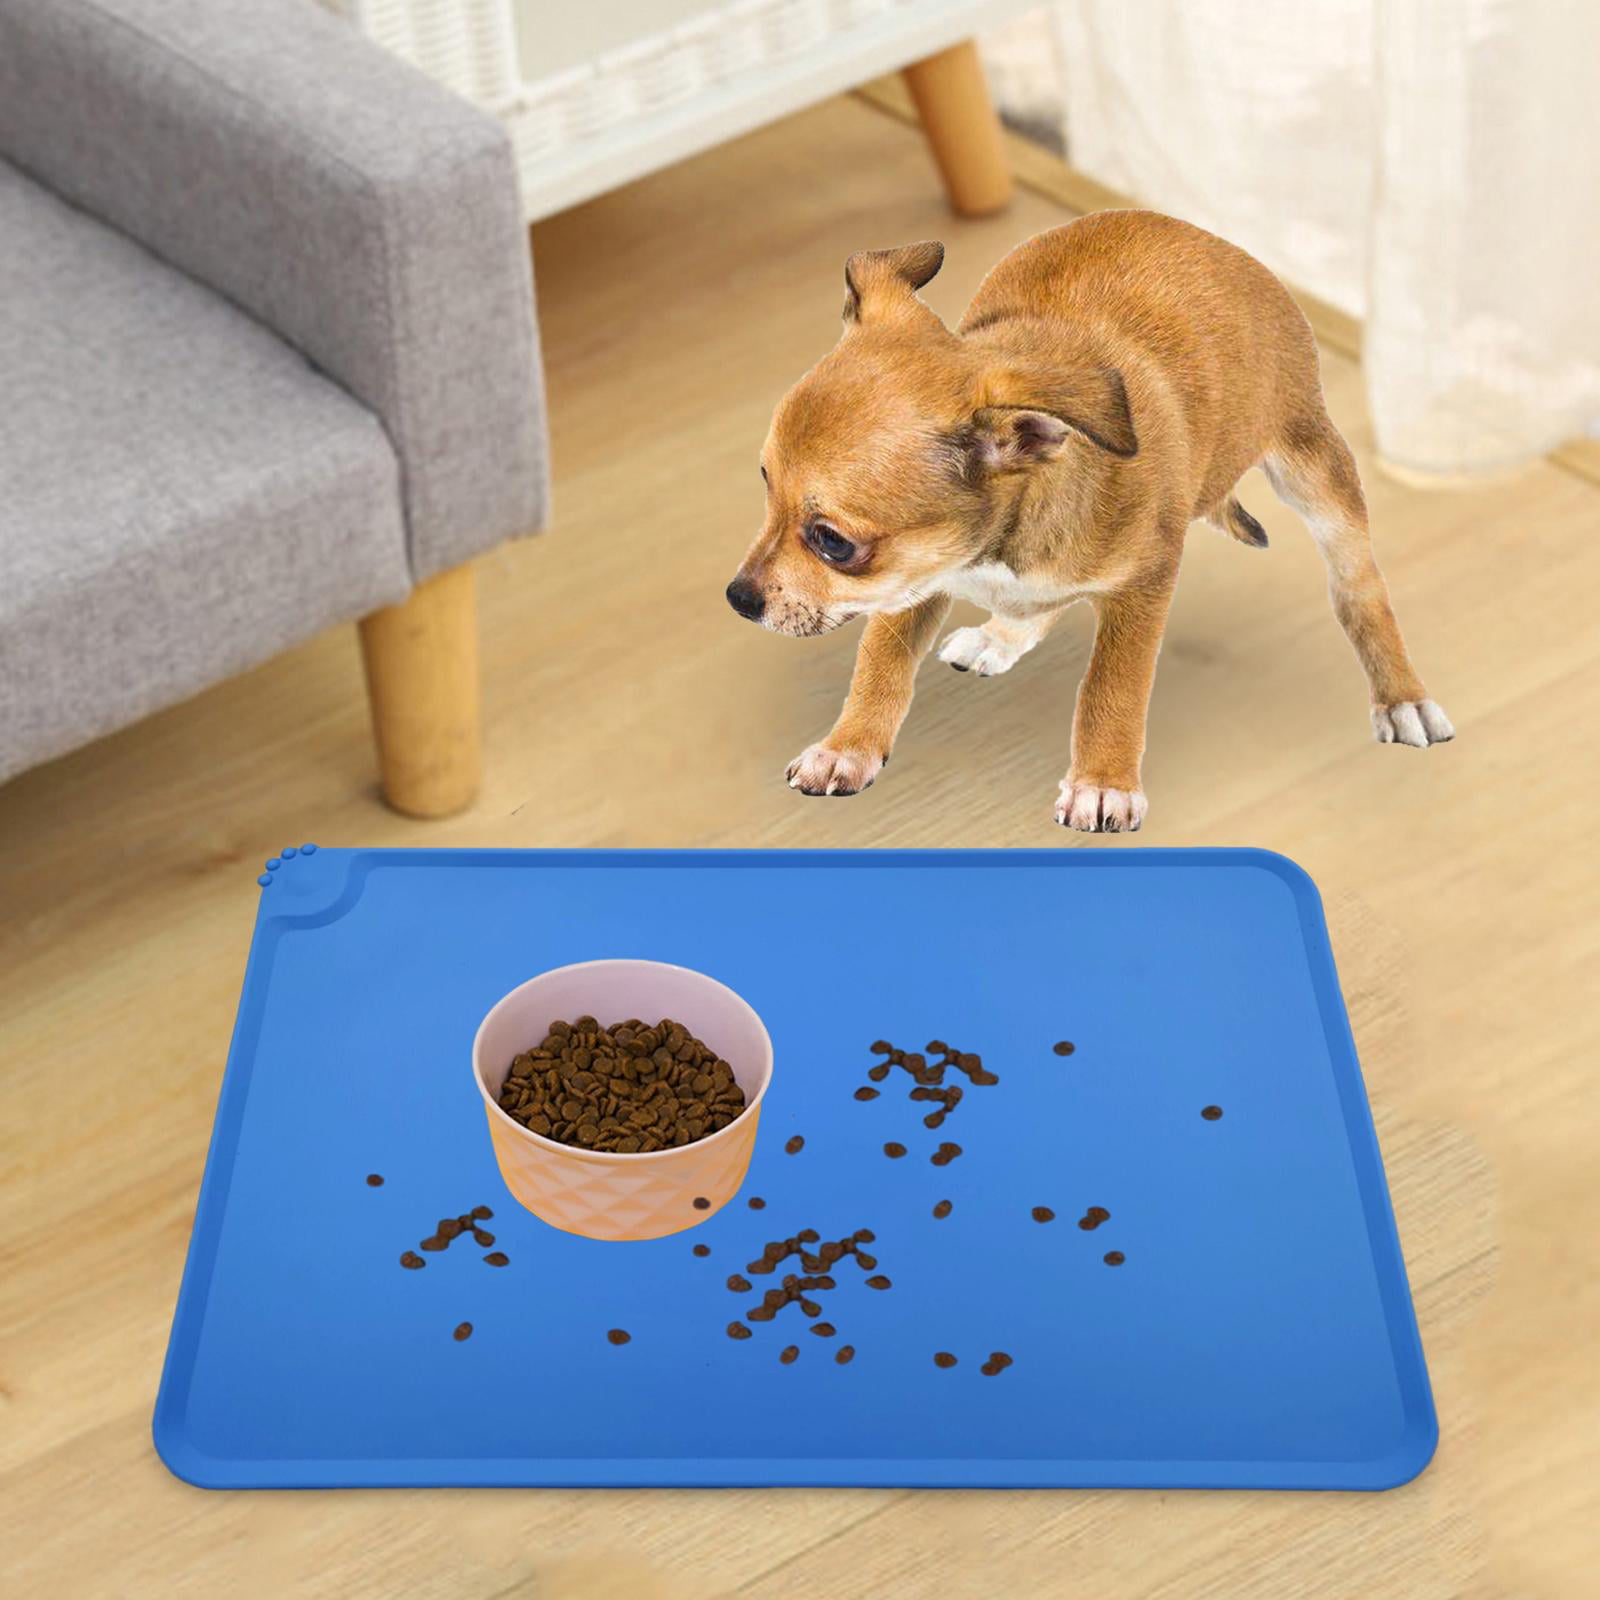 Pet Dog Puppy Cat Feeding Mat Pad Cute Cloud Shape Silicone Dish Bowl Food  Feed